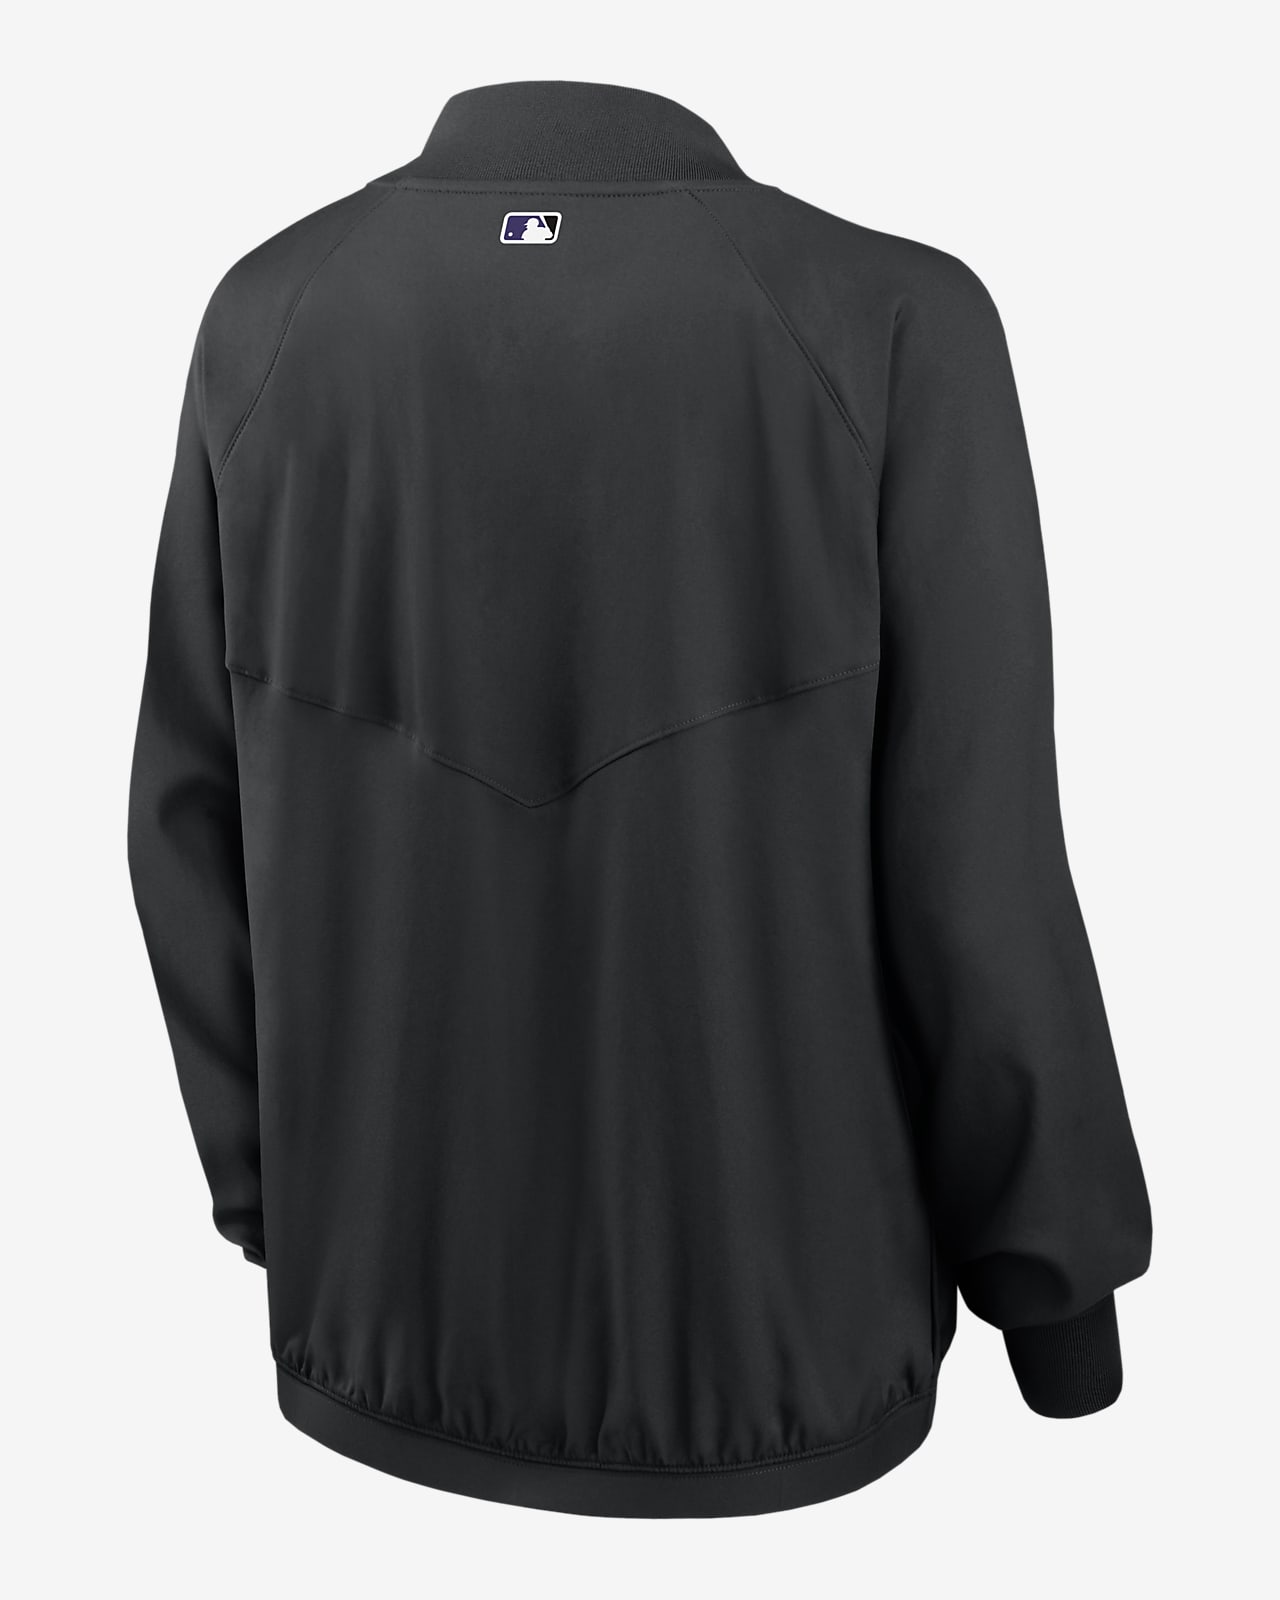 Nike Dri-FIT Team (MLB Colorado Rockies) Women's Full-Zip Jacket